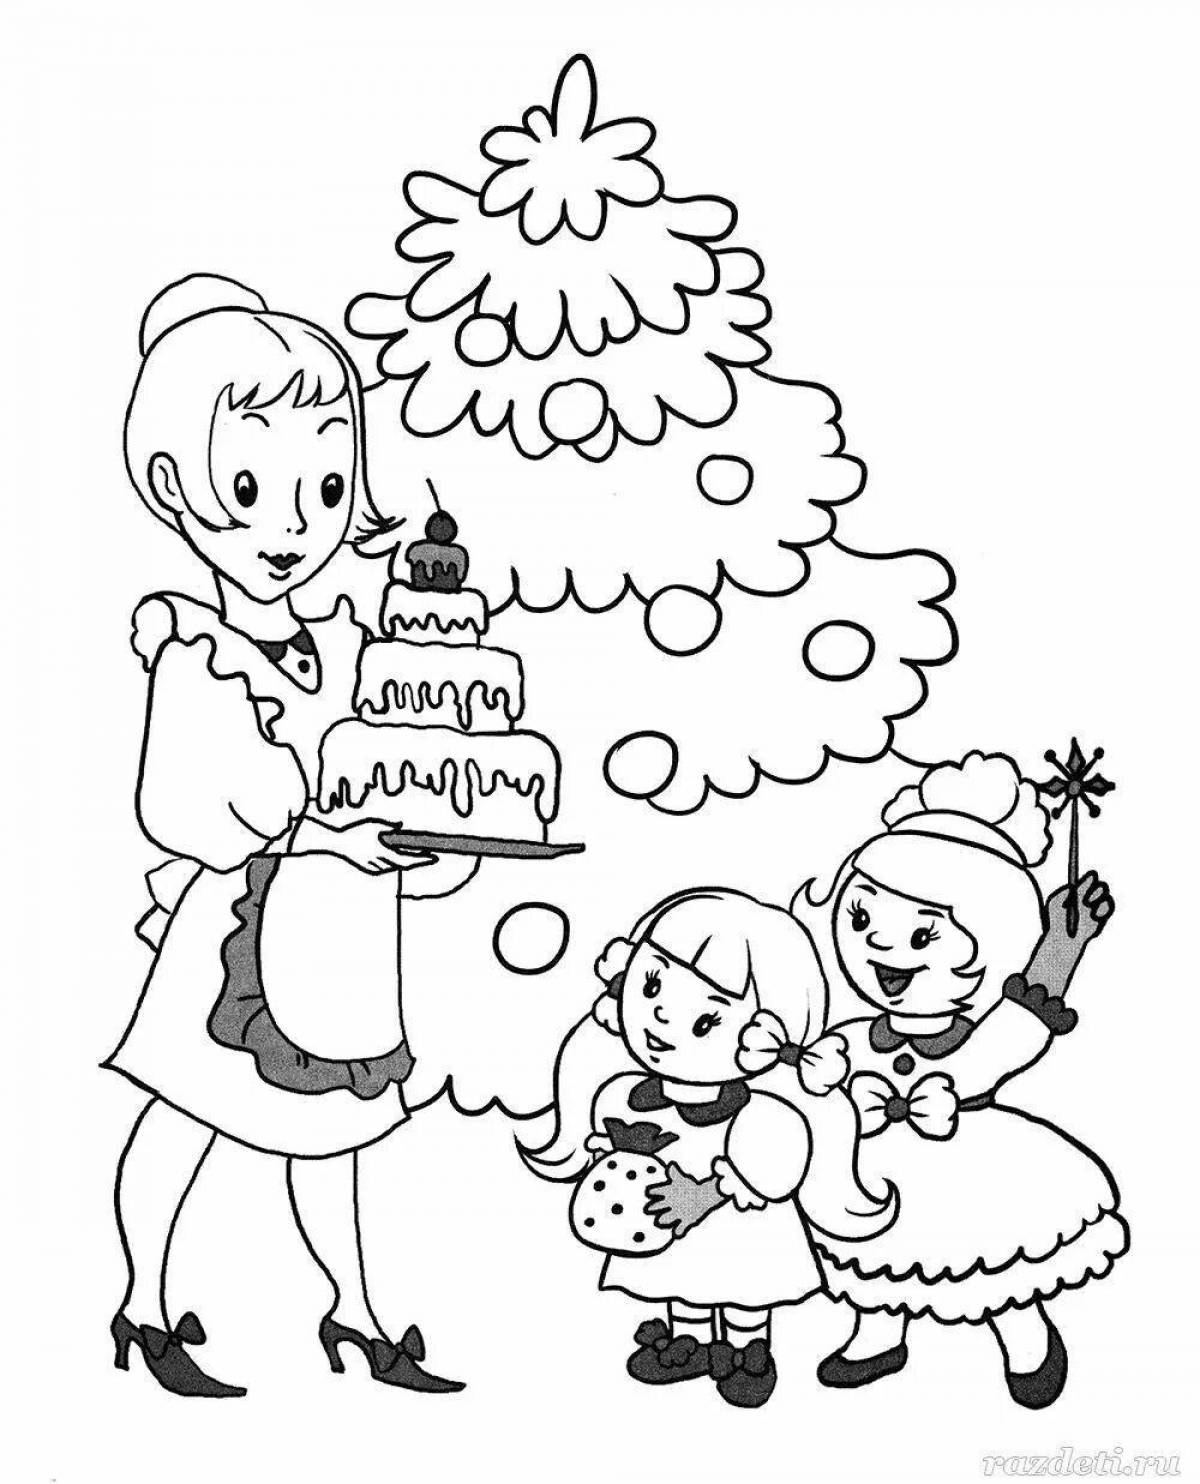 Shiny Christmas family coloring book